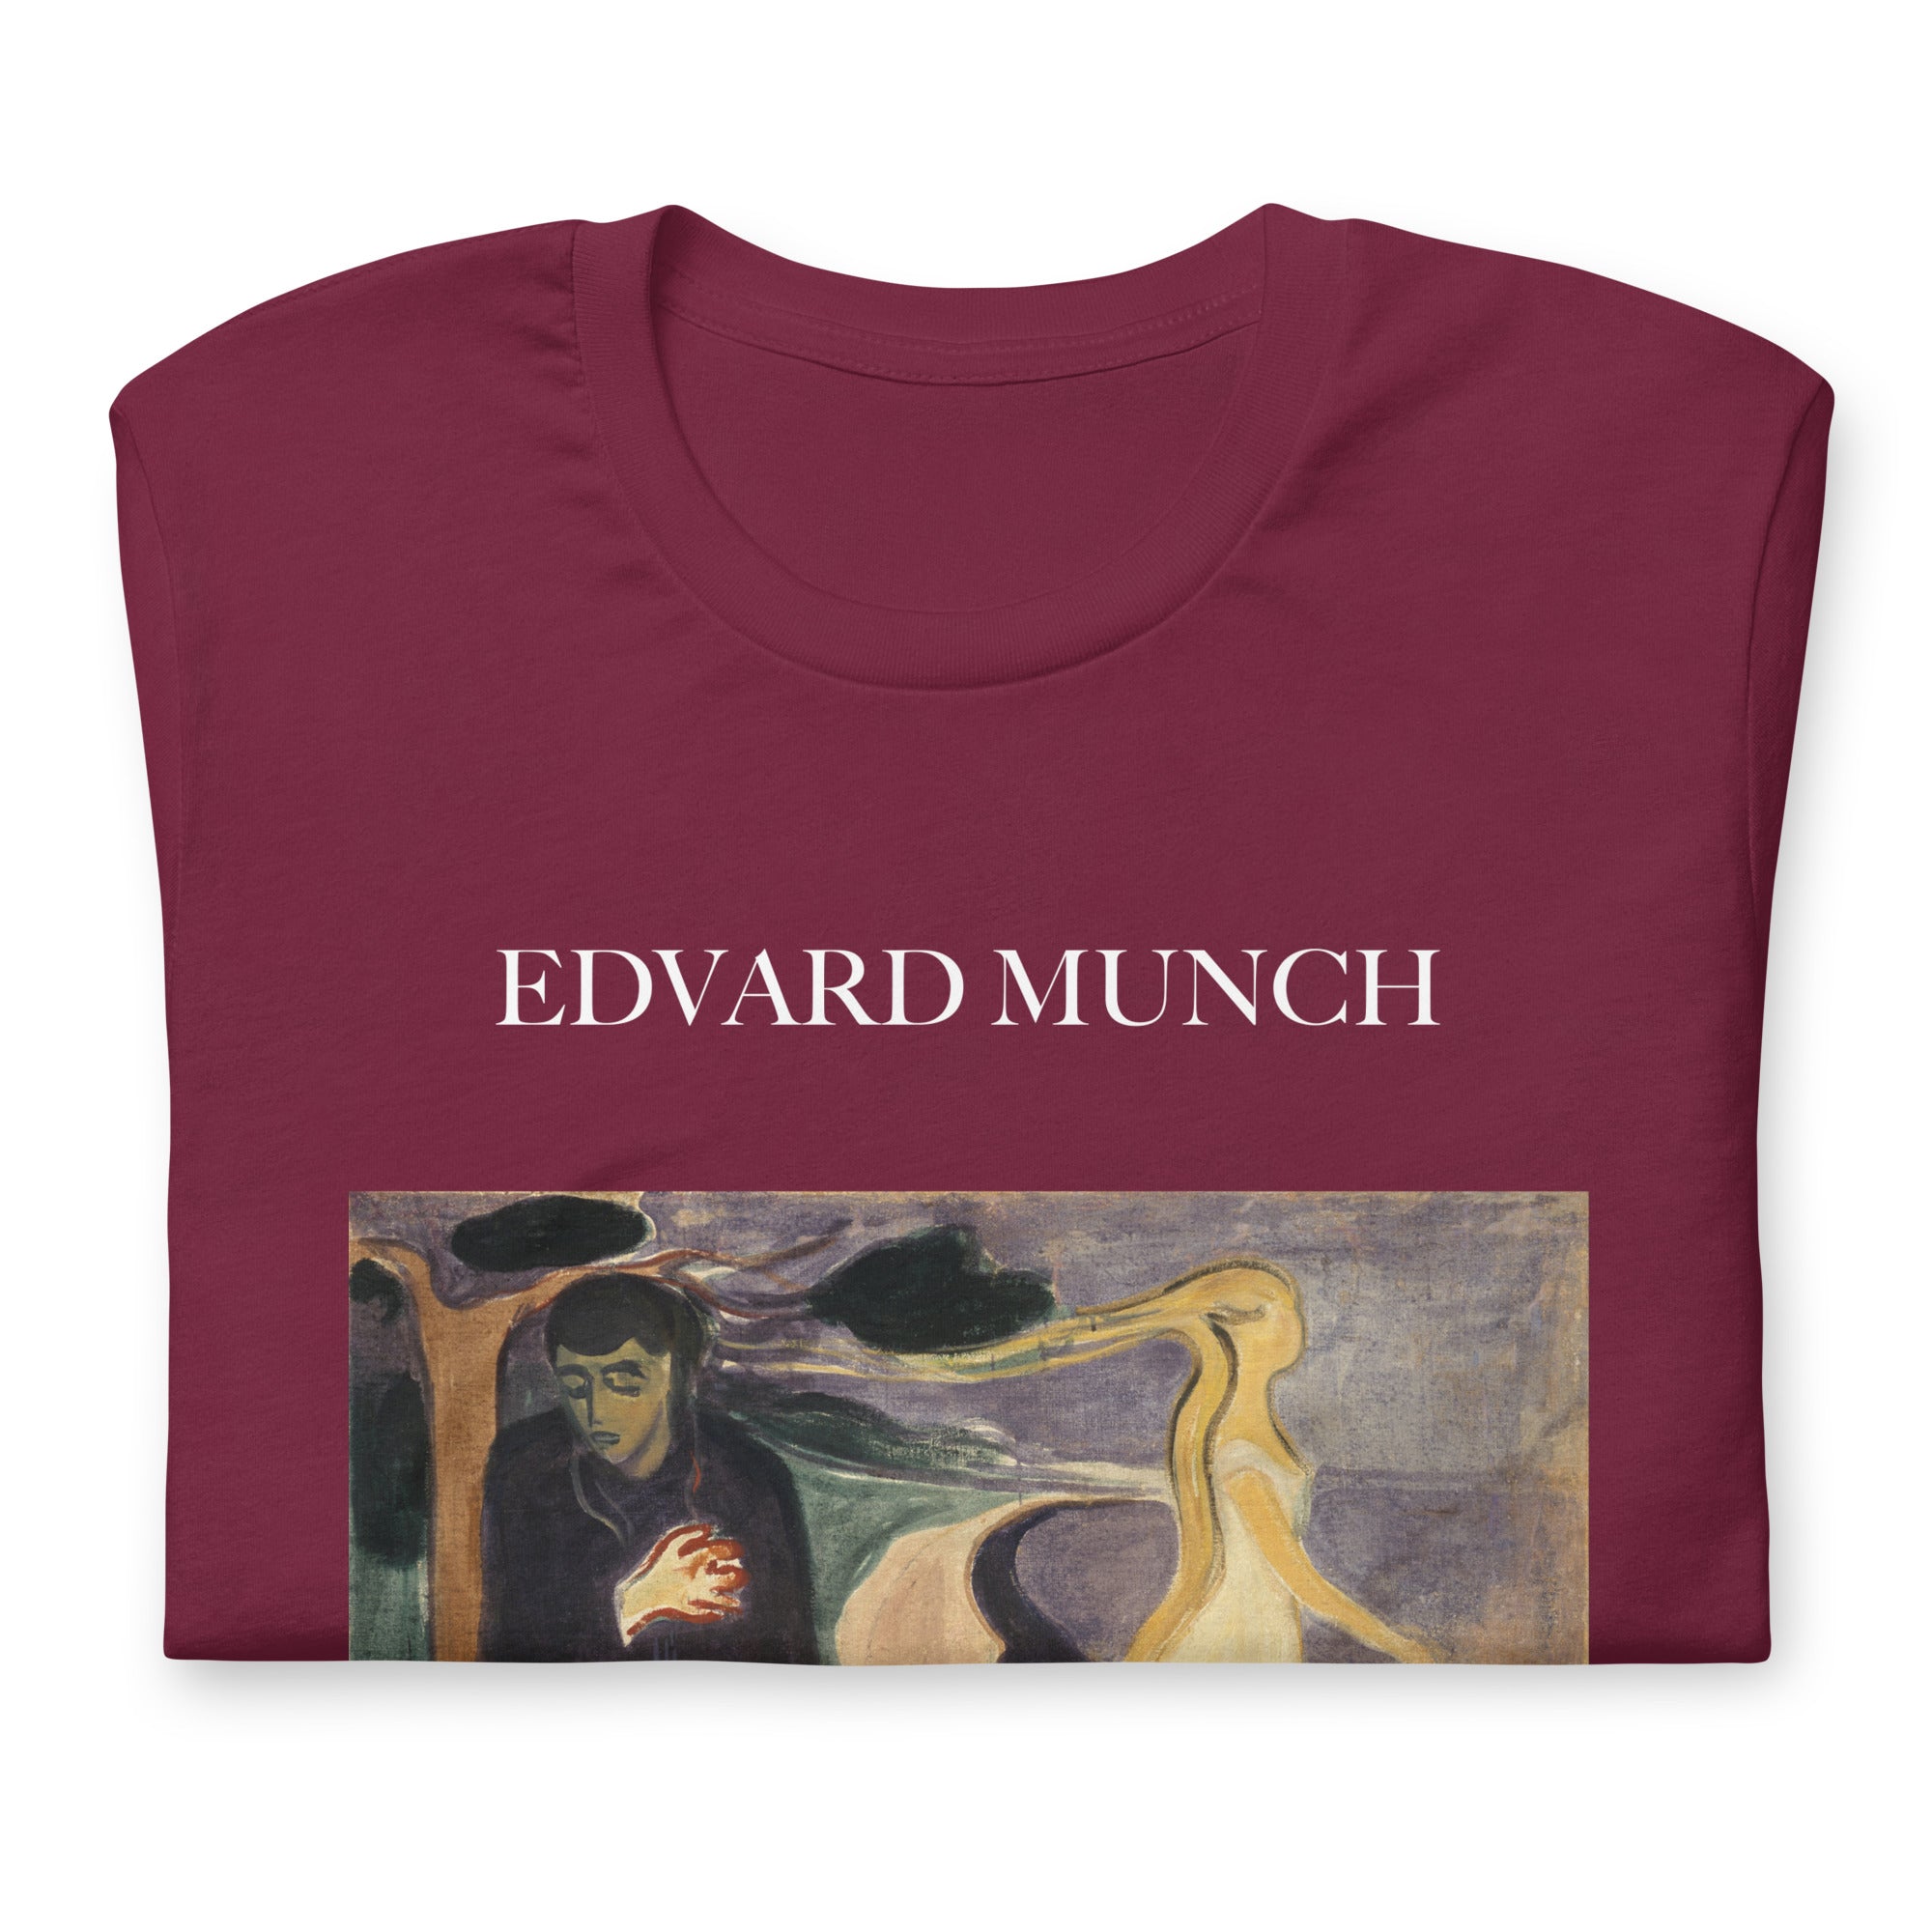 Edvard Munch 'Separation' Famous Painting T-Shirt | Unisex Classic Art Tee